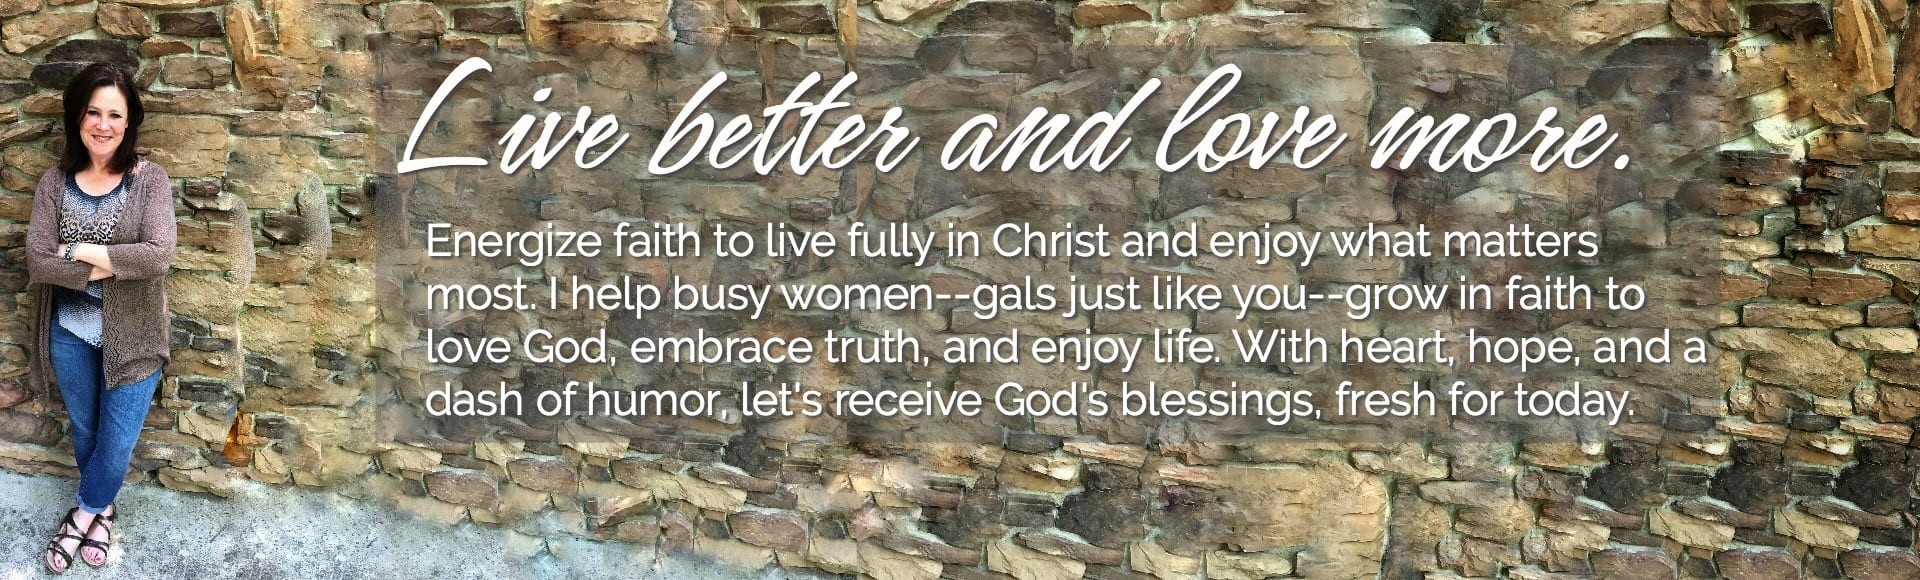 Ginger Harrington encourages women to love God, embrace truth, and enjoy life with fresh faith.